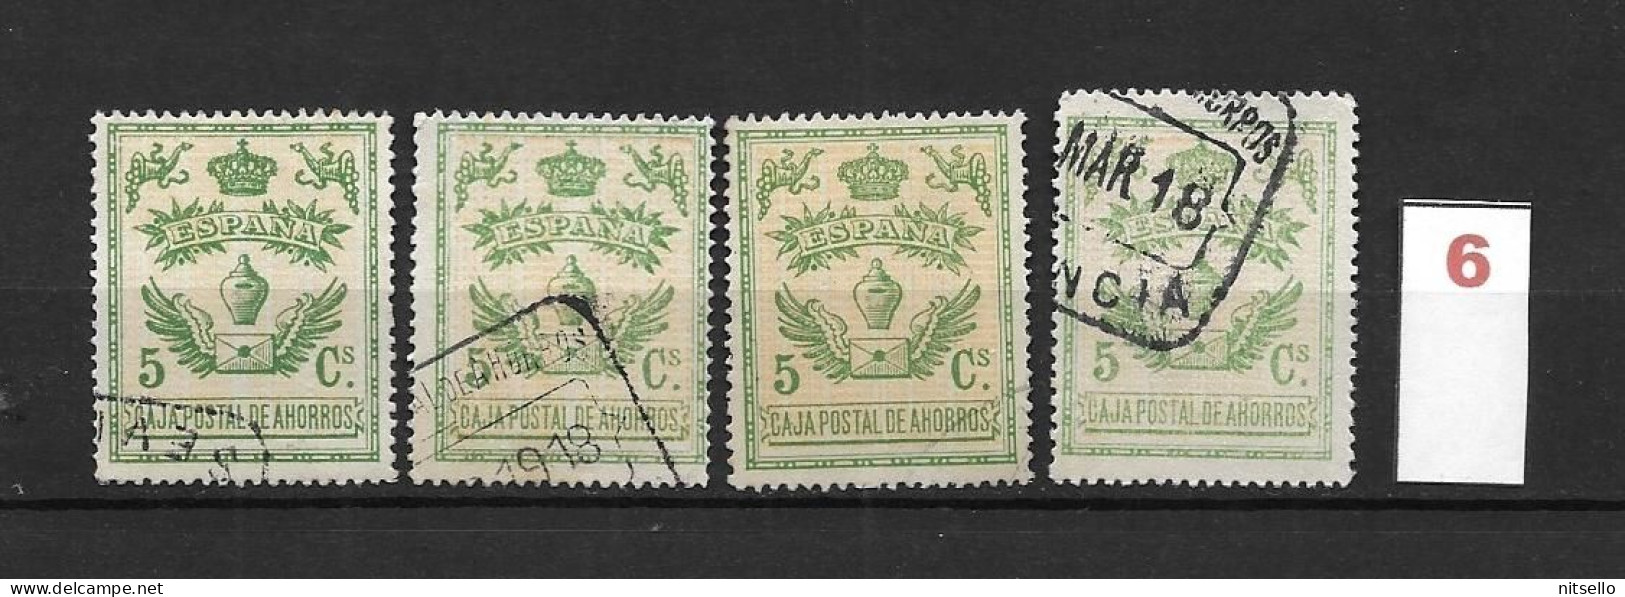 LOTE 1891 B  ///   ESPAÑA 1918 CAJA POSTAL DE AHORROS 5 CTMOS         ¡¡¡ LIQUIDACION - JE LIQUIDE - SIEDLUNG !!! - Revenue Stamps